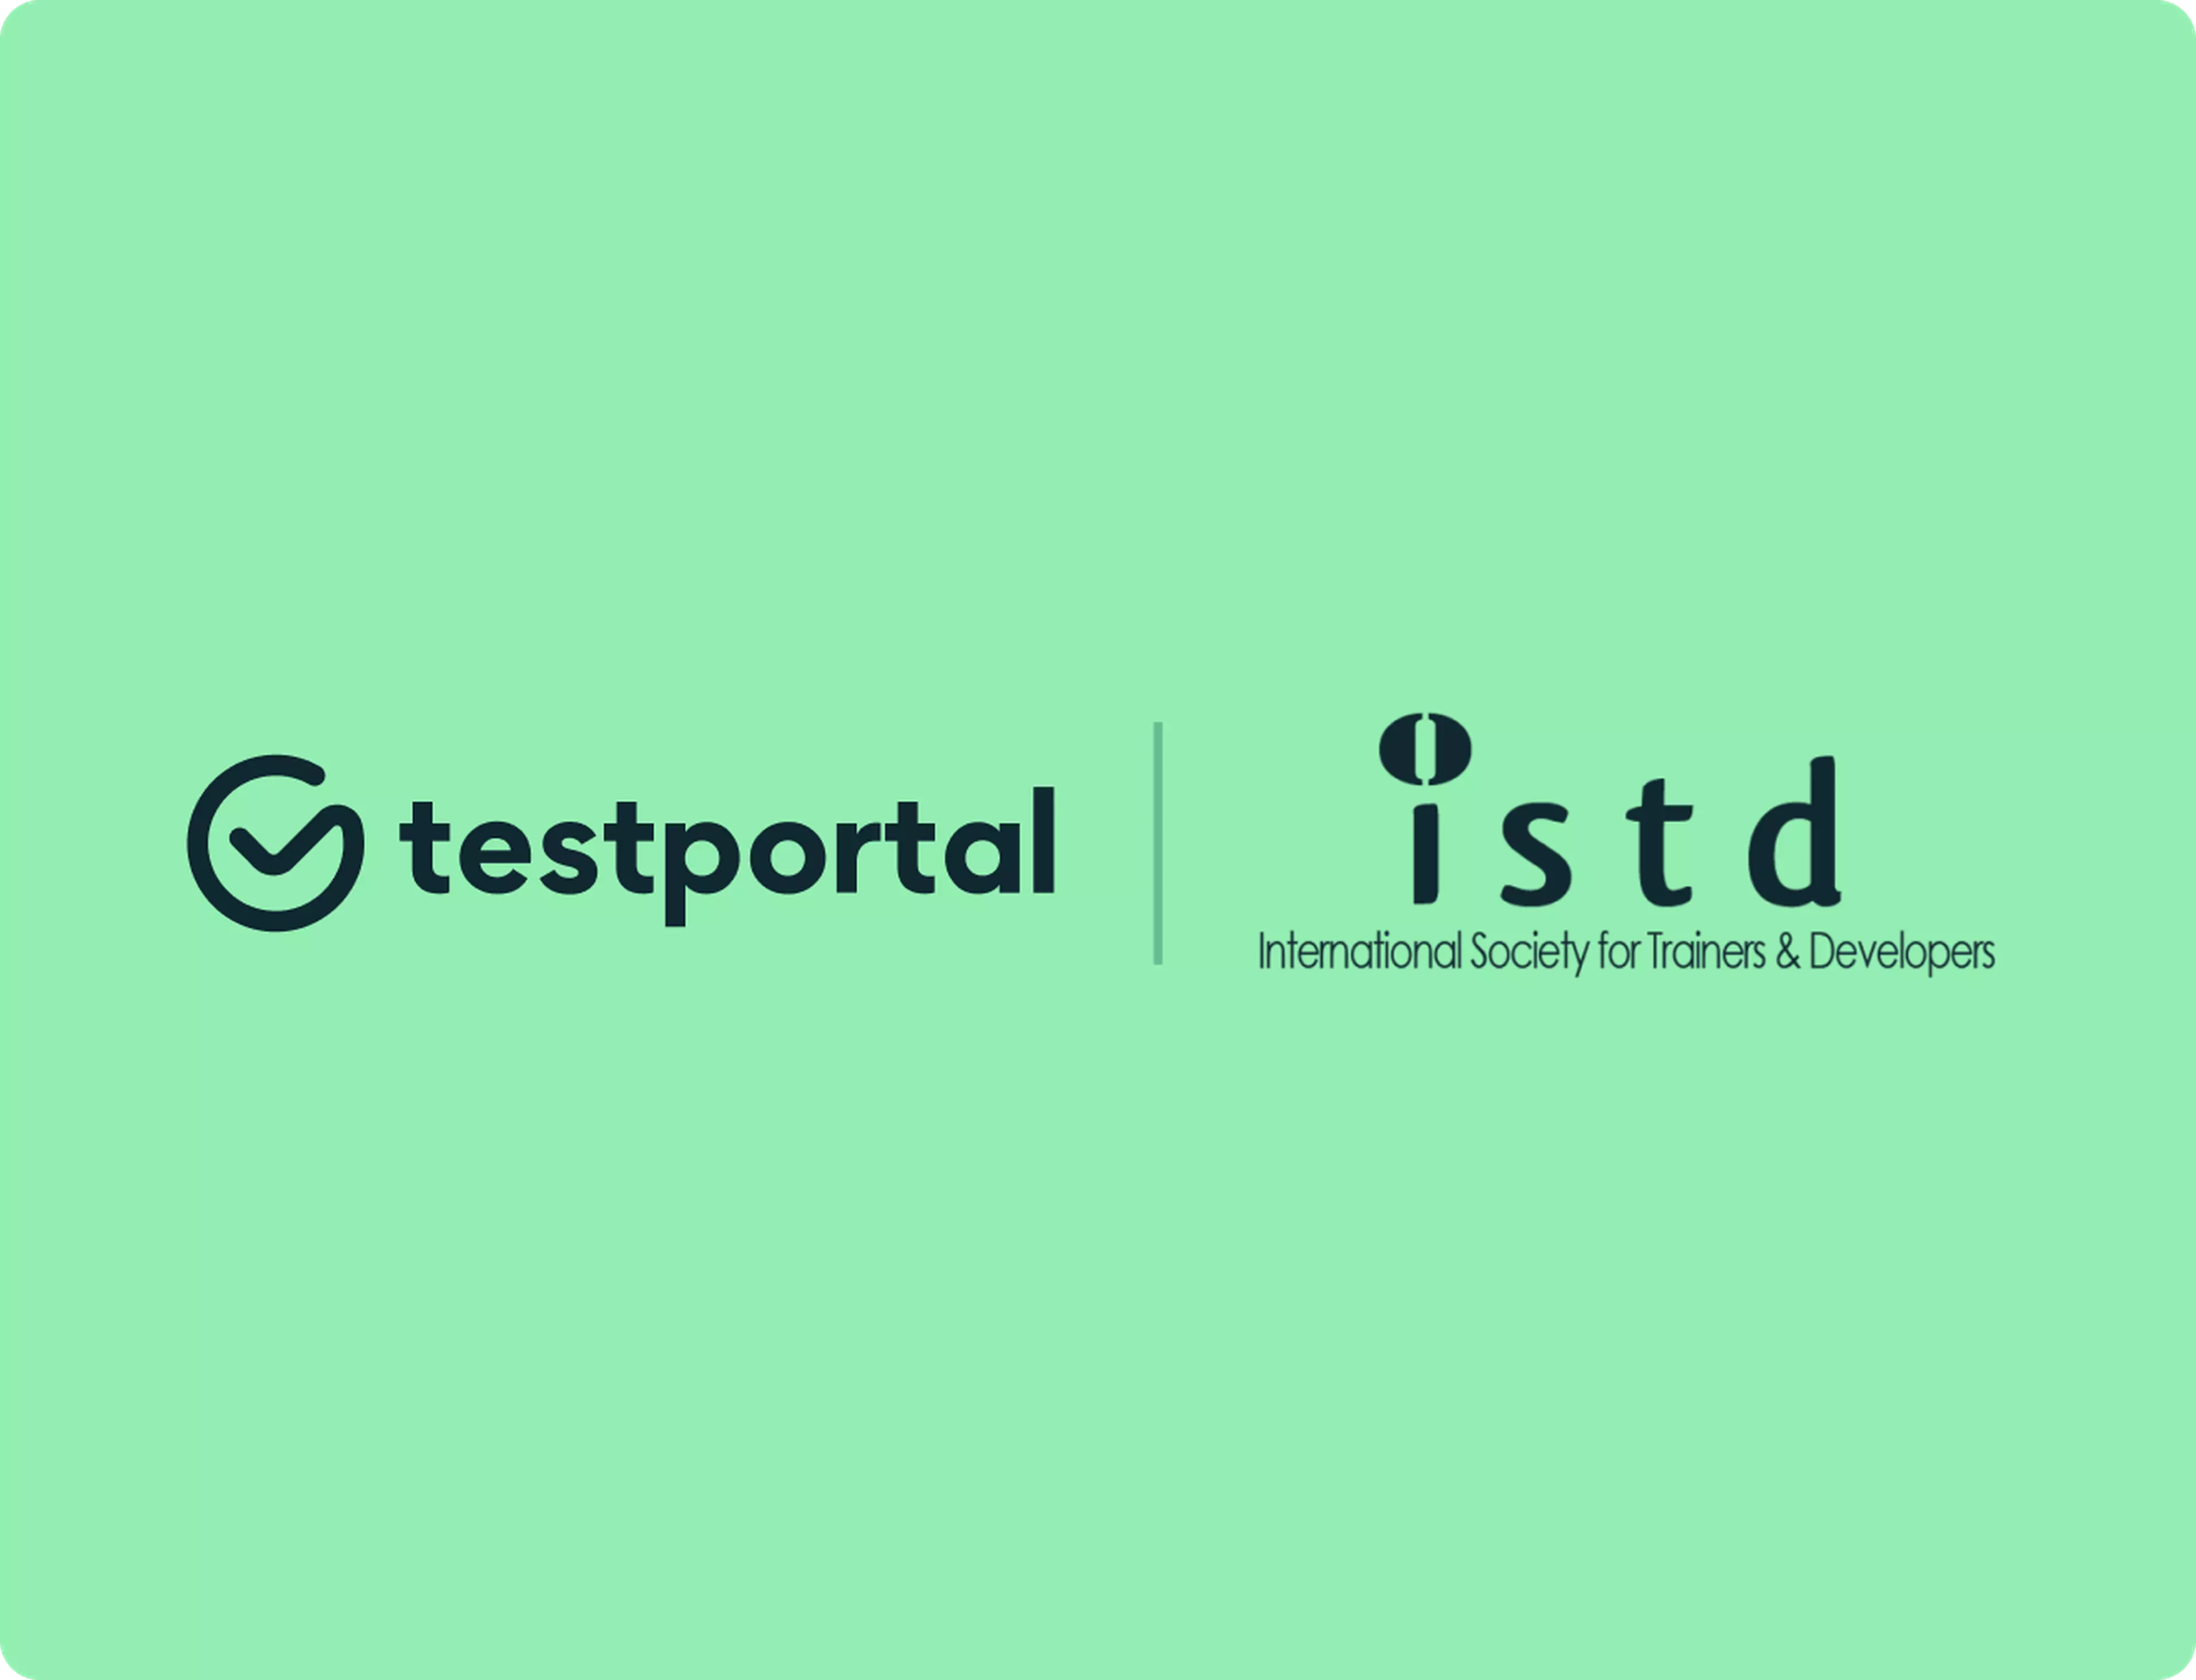 Testportal and ISTD logos.